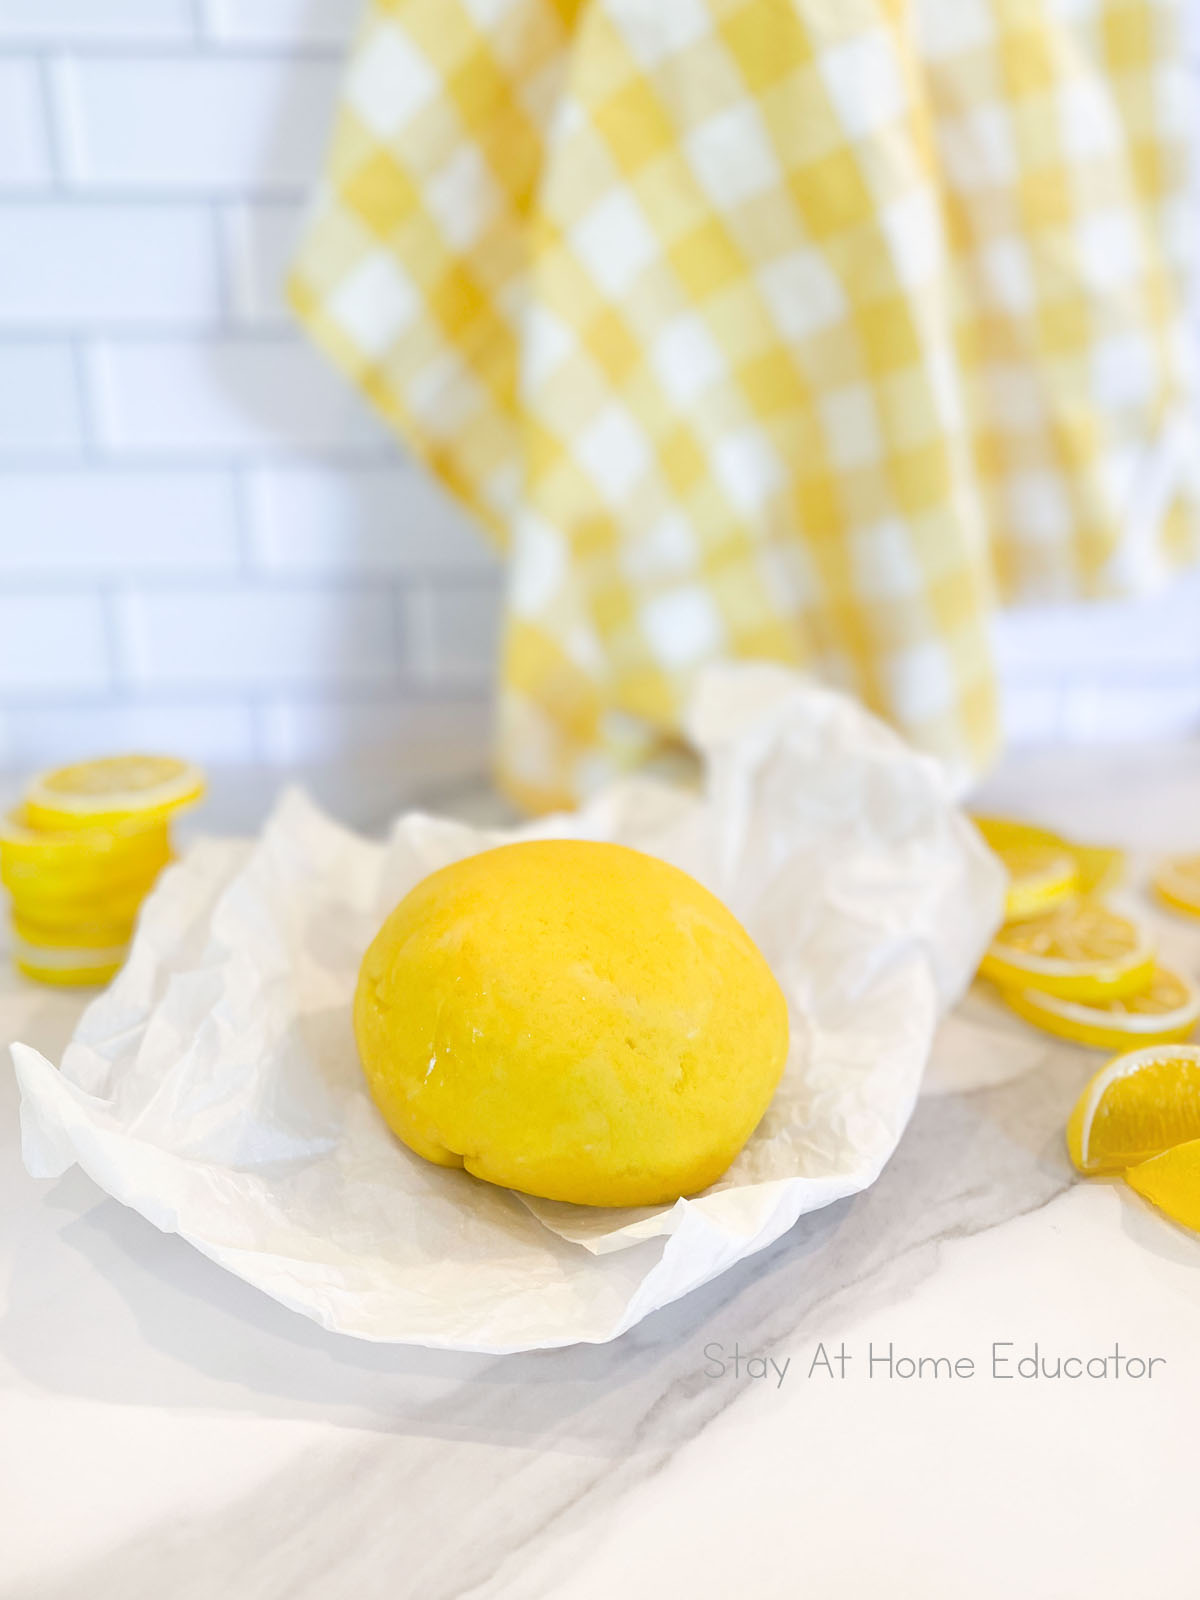 ingredients for ball of lemon playdough on parchment paper using classic cooked playdough recipe | lemonade playdough with lemon juice